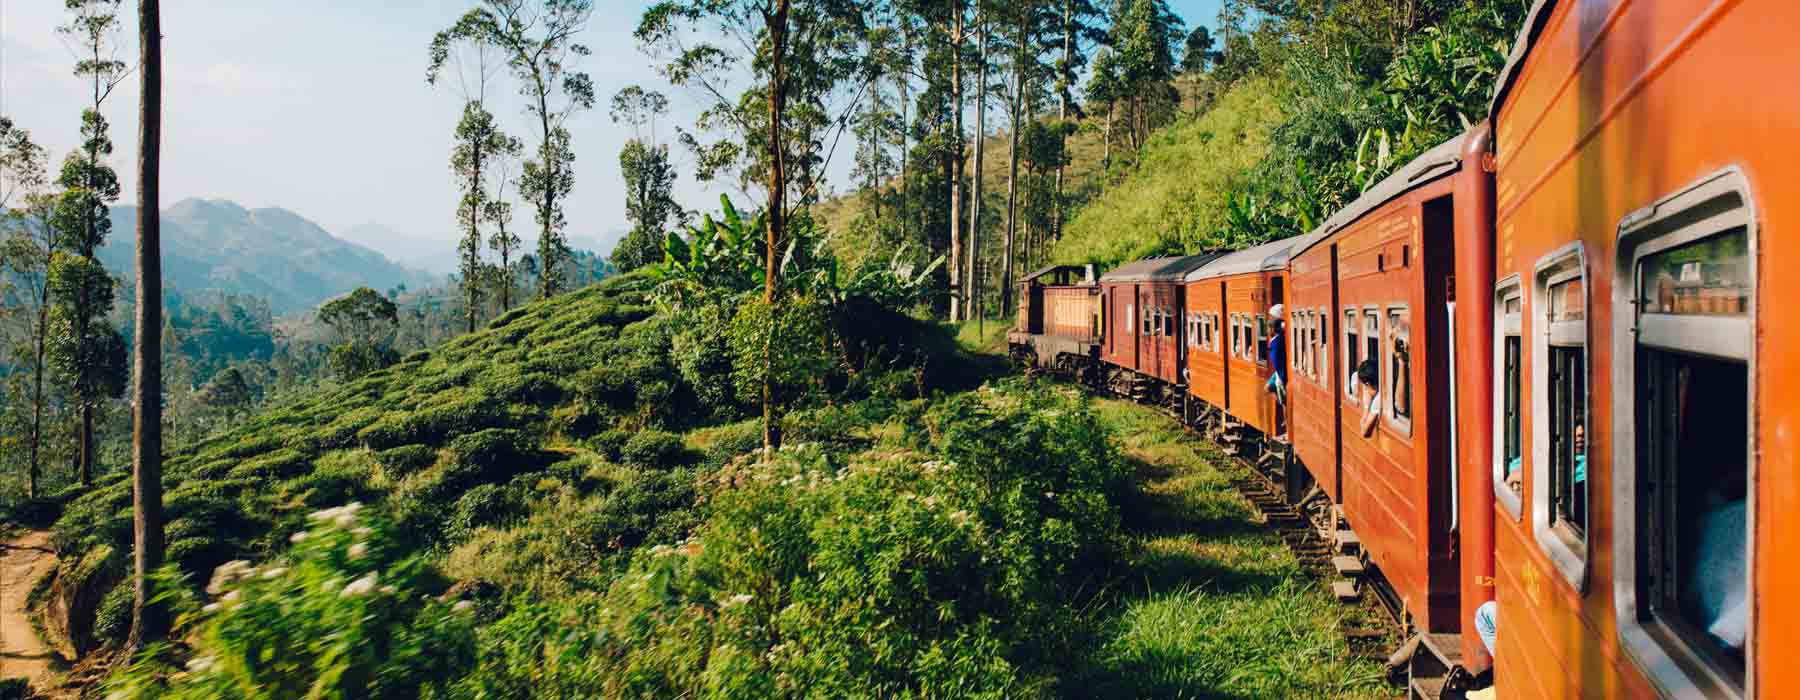 Sri Lanka<br class="hidden-md hidden-lg" /> Responsible Travel